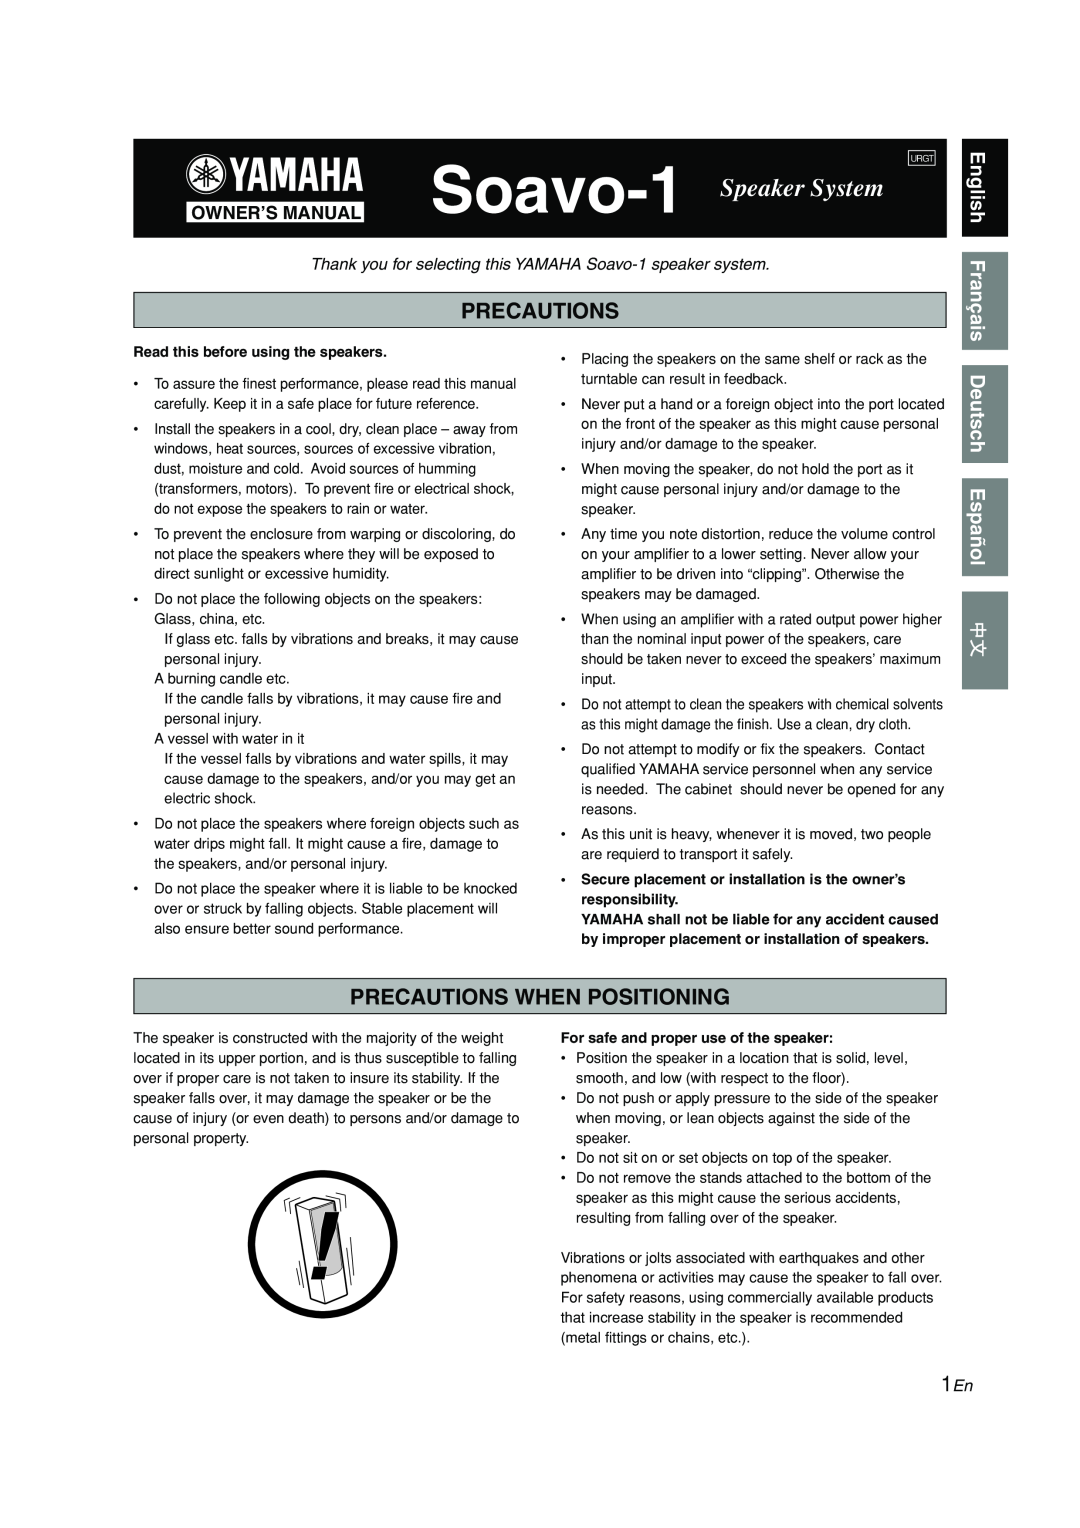 Yamaha owner manual Precautions When Positioning, English Français, Deutsch Español, Soavo-1 Speaker System 